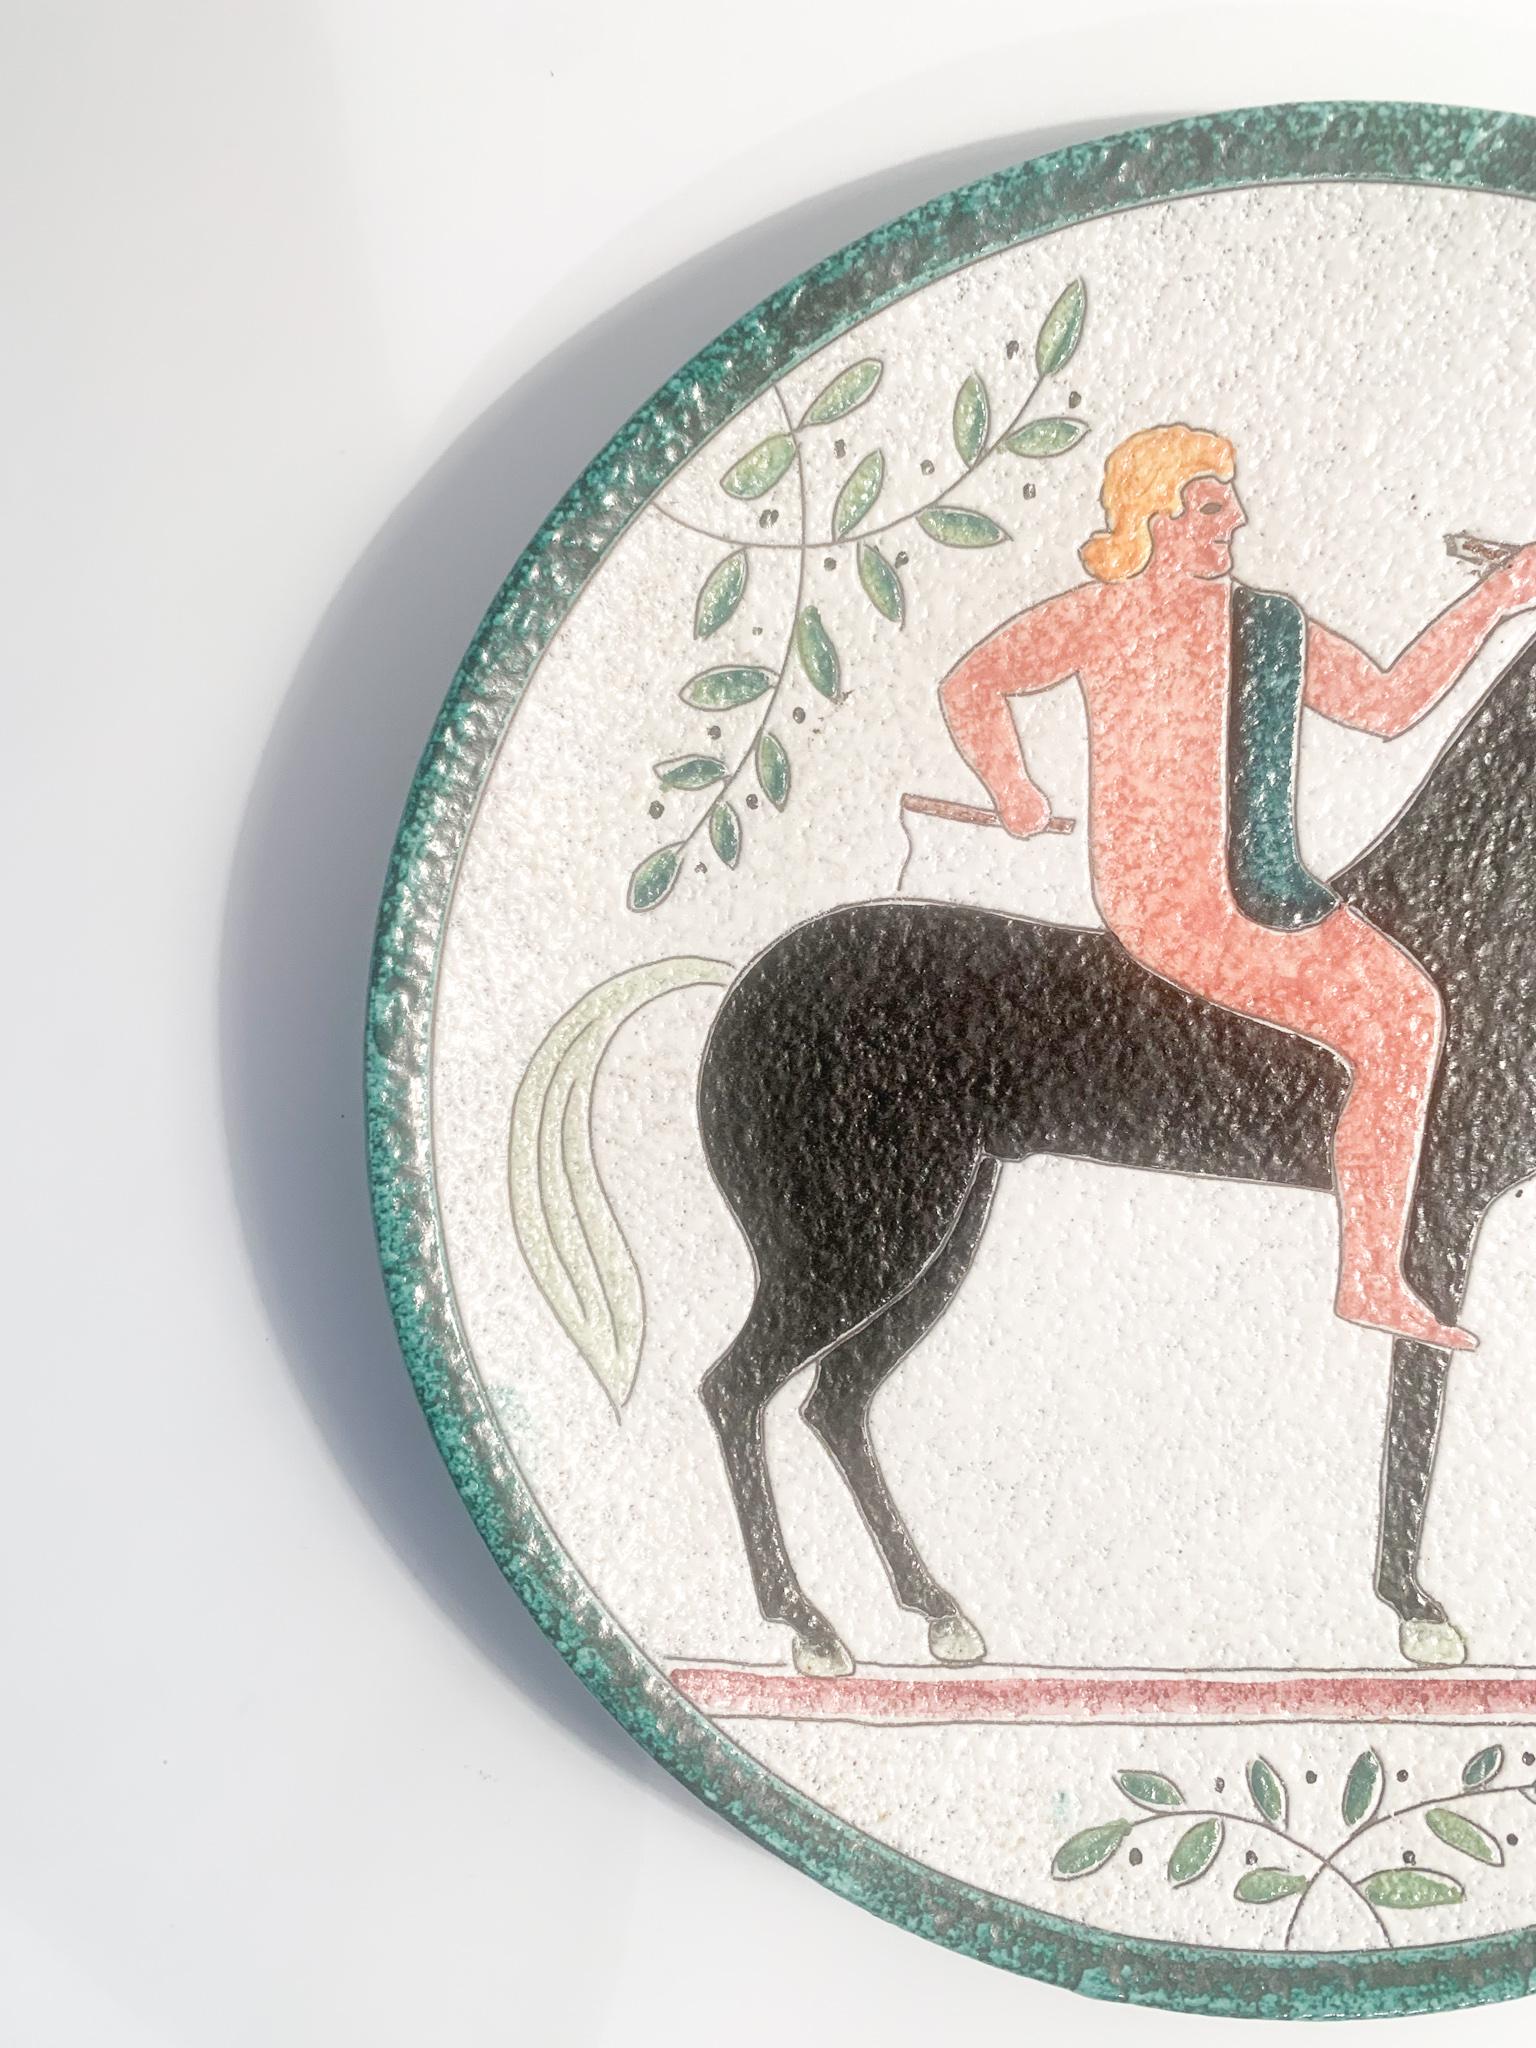 Decorative Ceramic Plate by Carlo Morelli Faenza, depicting a knight, made in the 1960s

Ø 27.5 cm